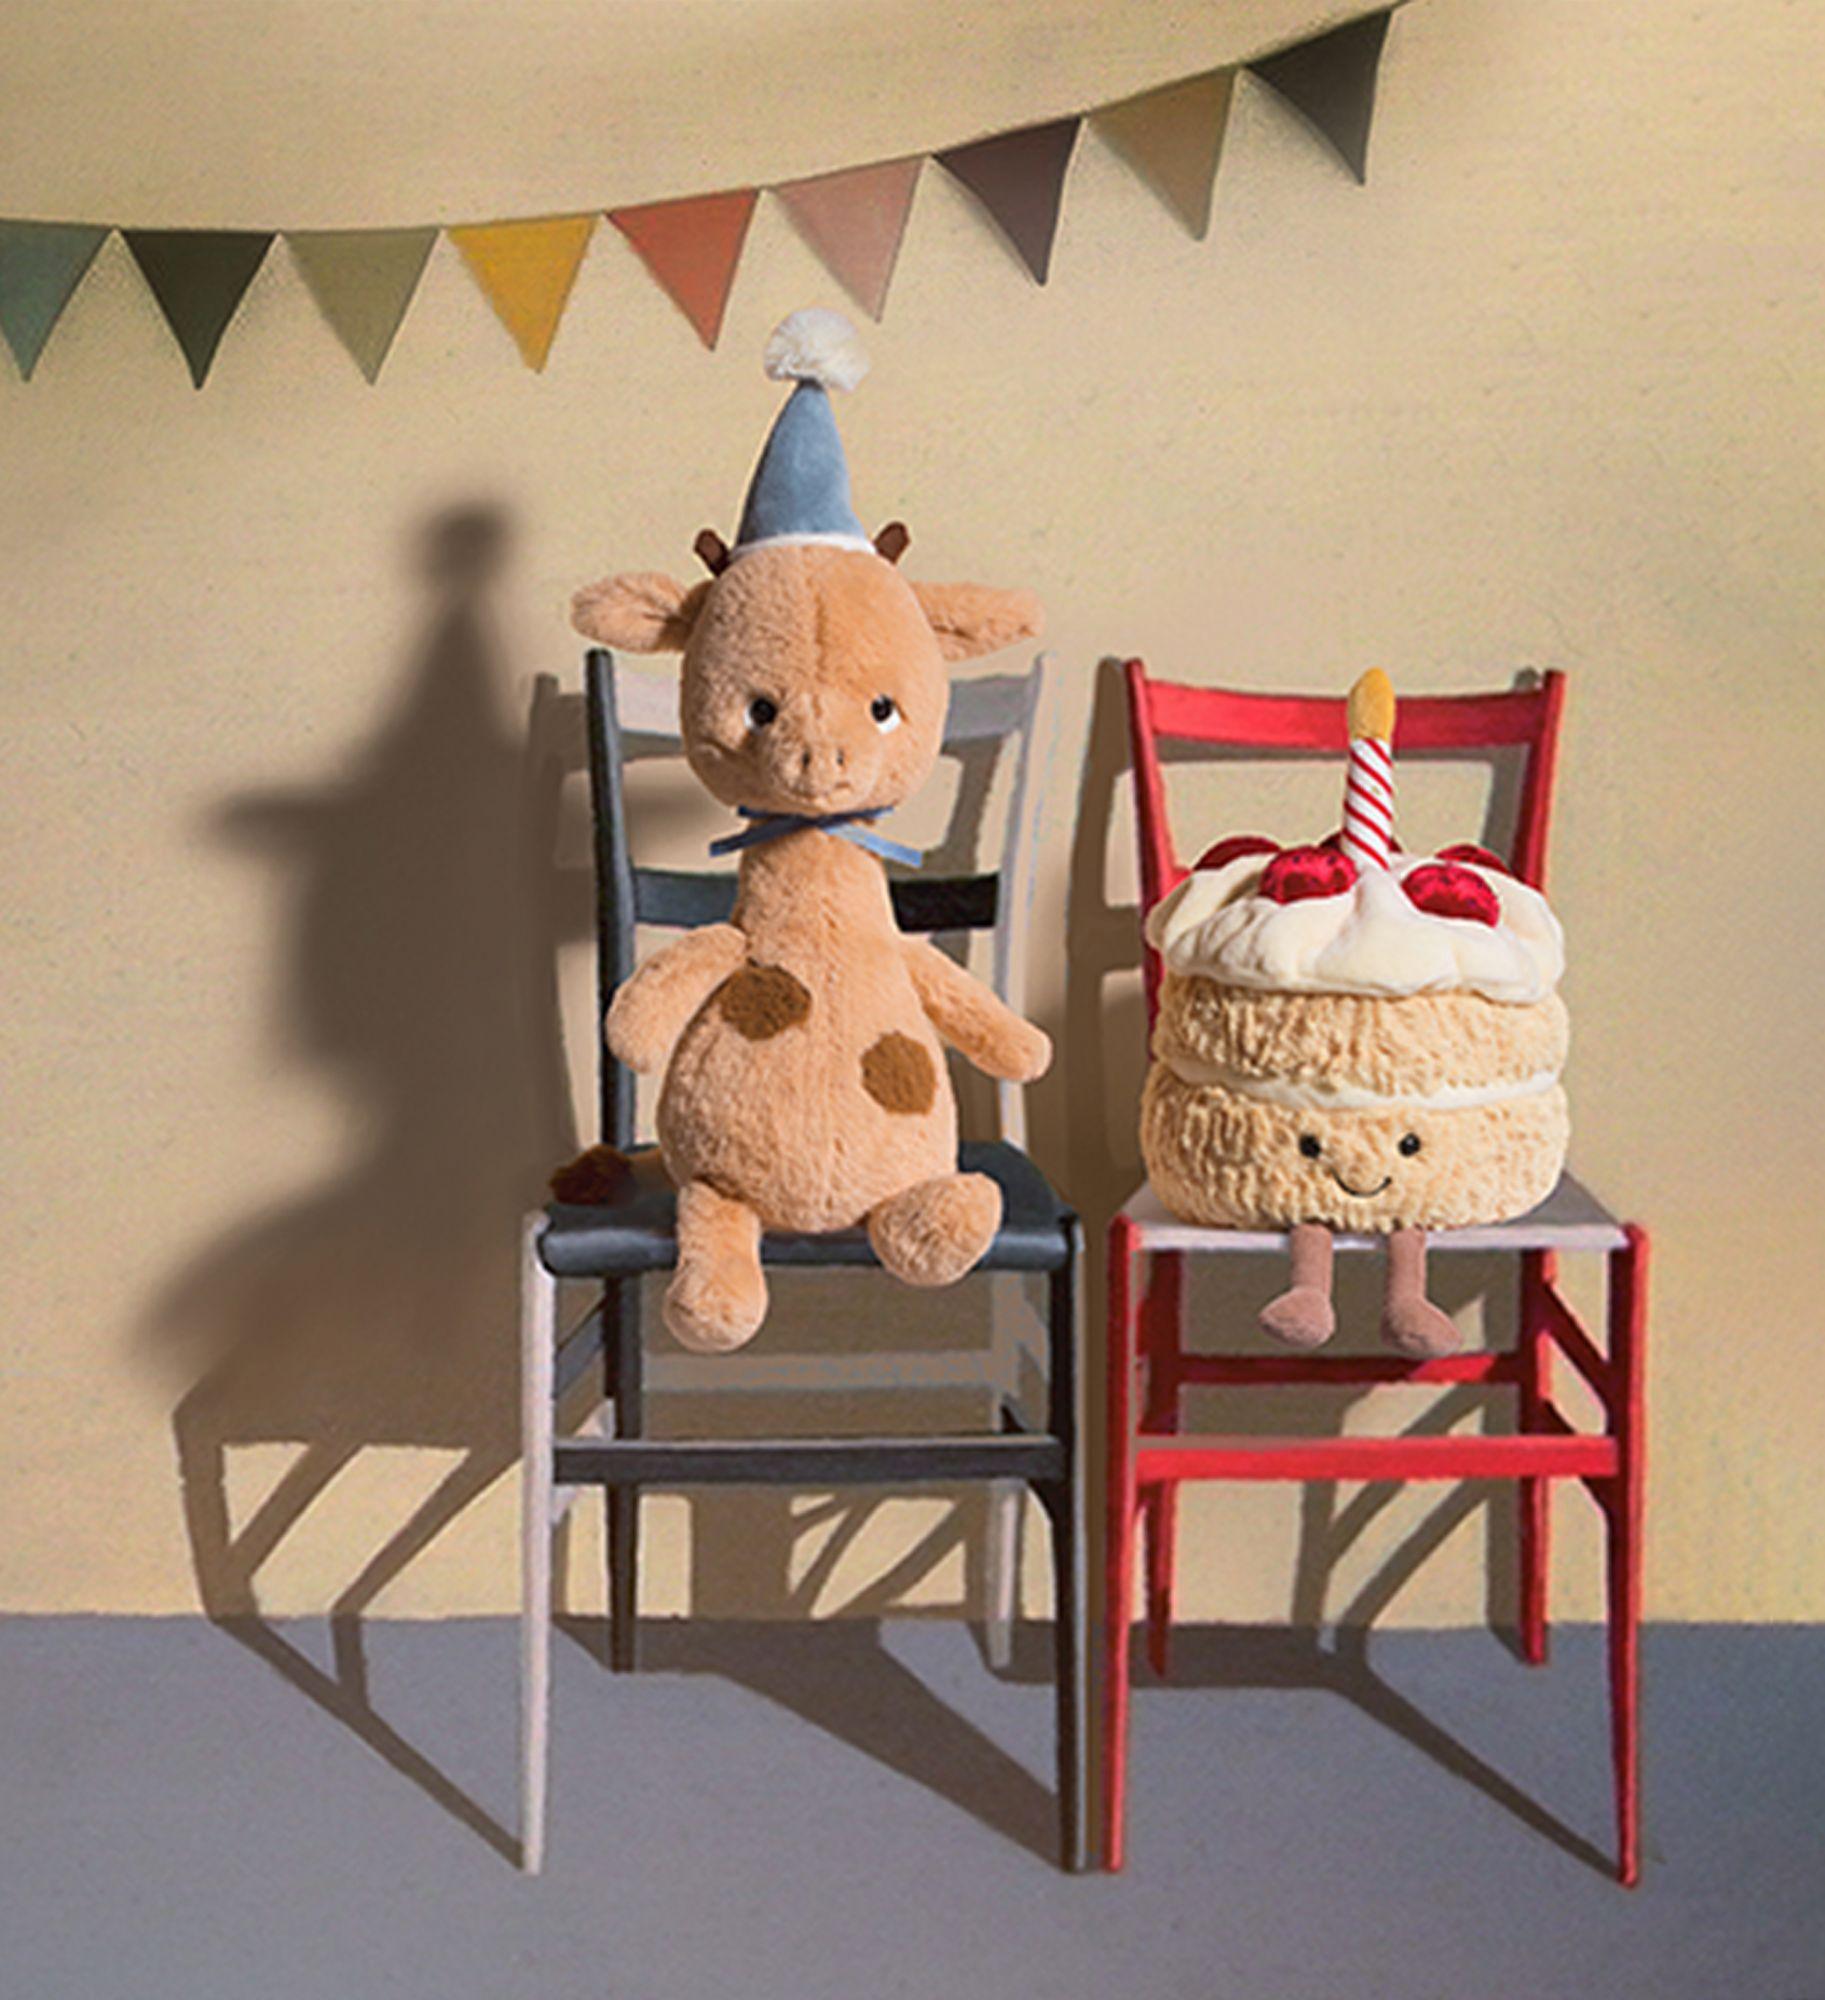 Jellycat: przytulanka tort urodzinowy Amuseable Birthday Cake 16 cm - Noski Noski